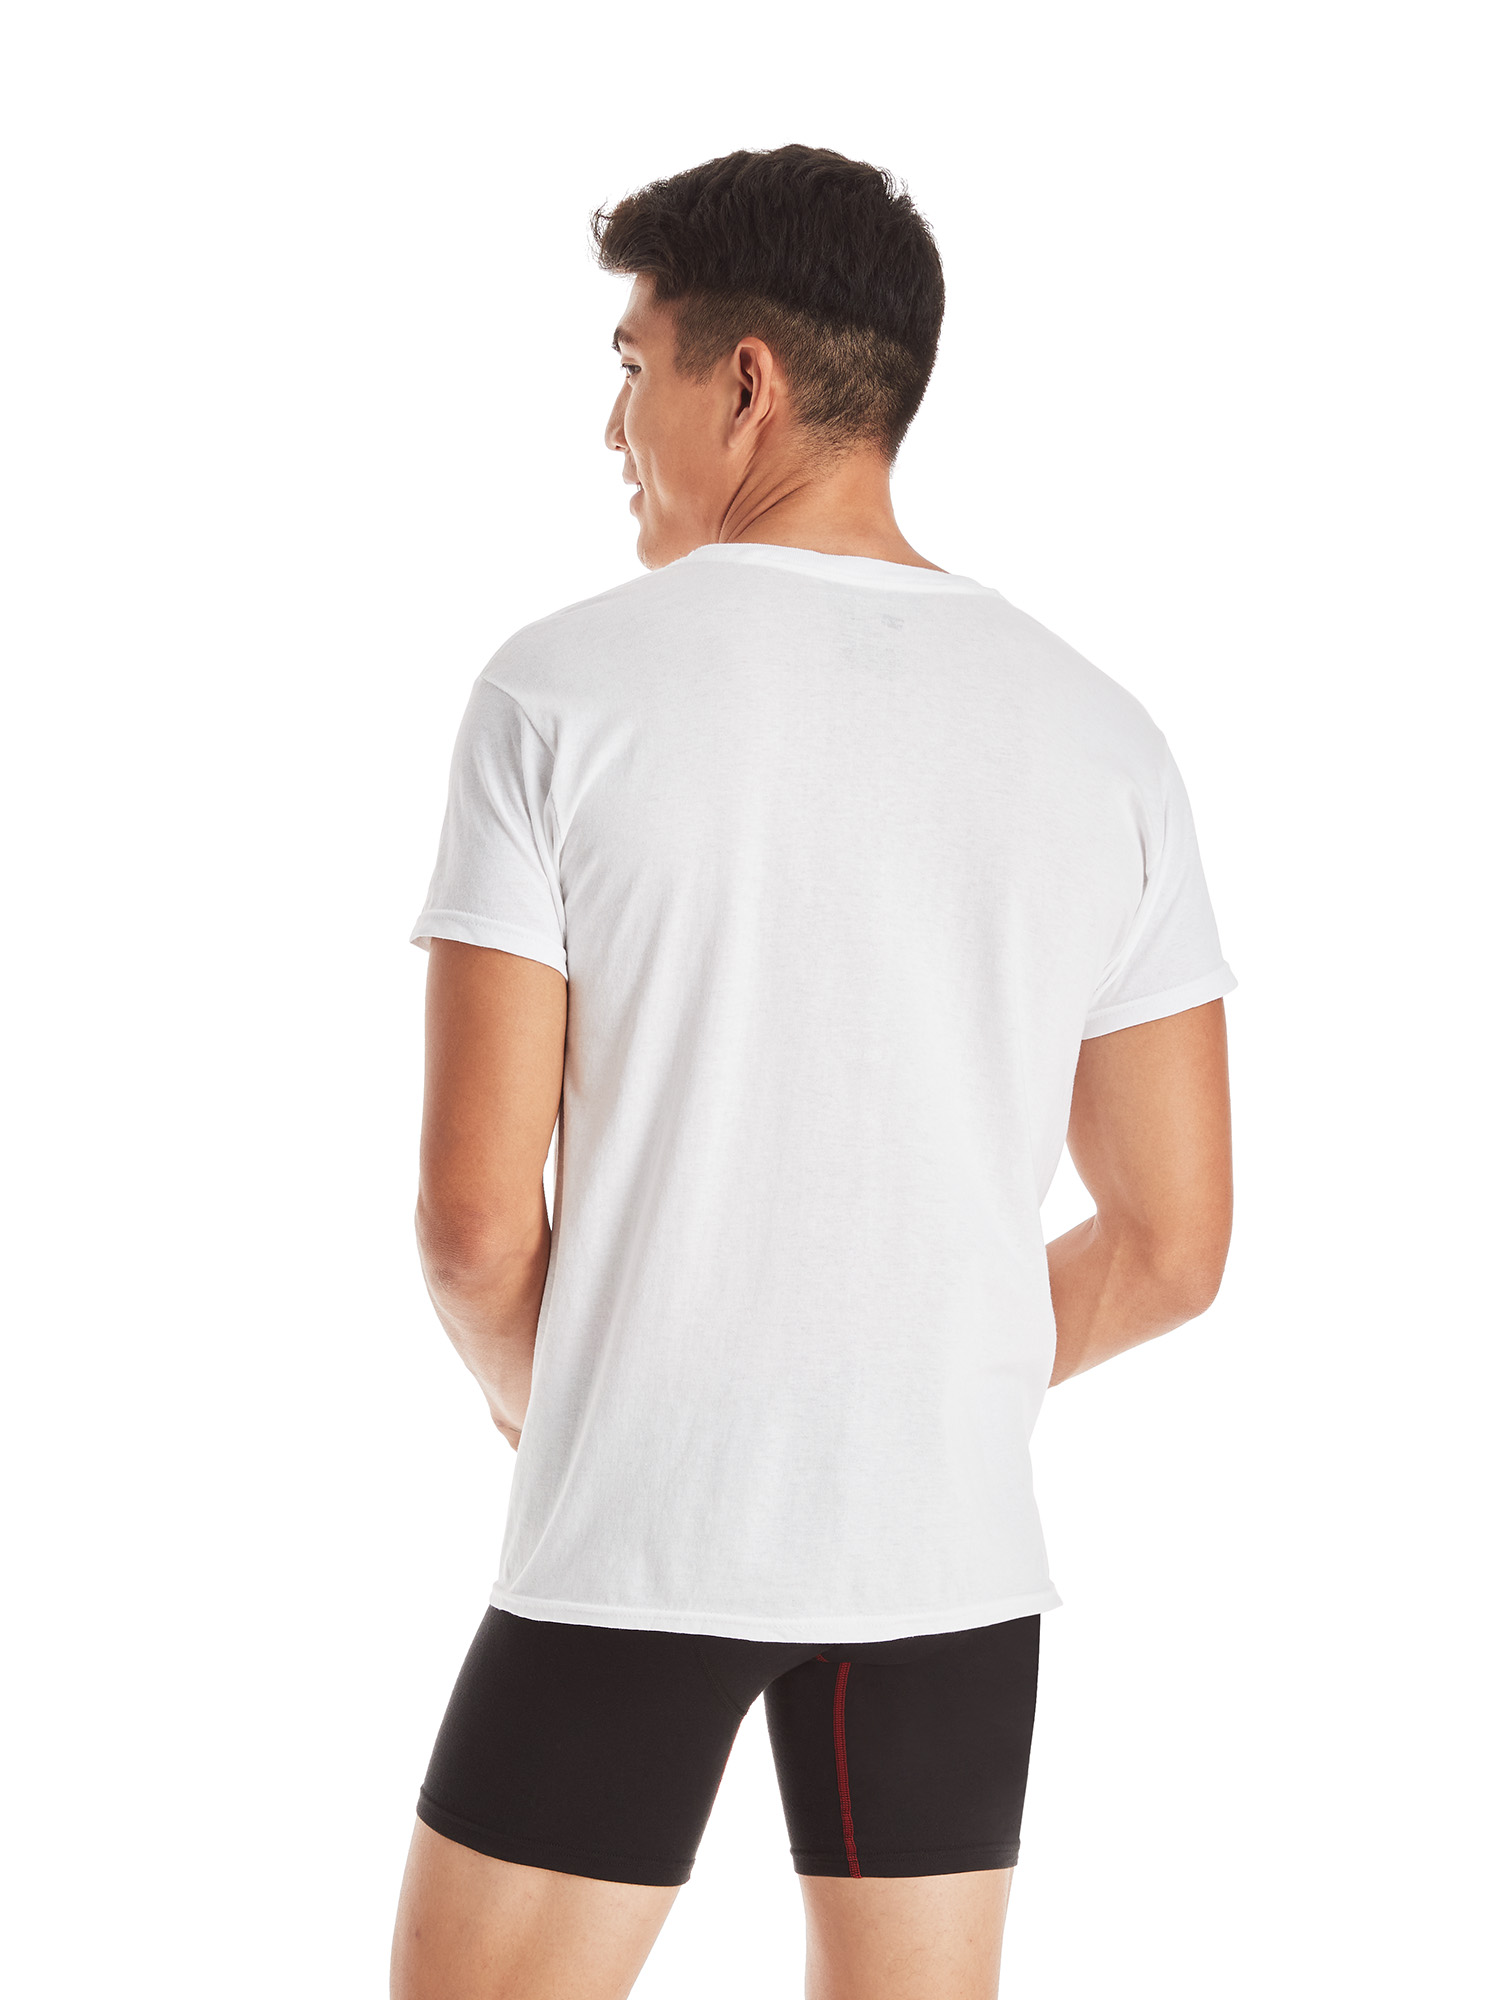 Hanes Men's Super Value Pack White Crew T-Shirt Undershirts, 10 Pack - image 5 of 10